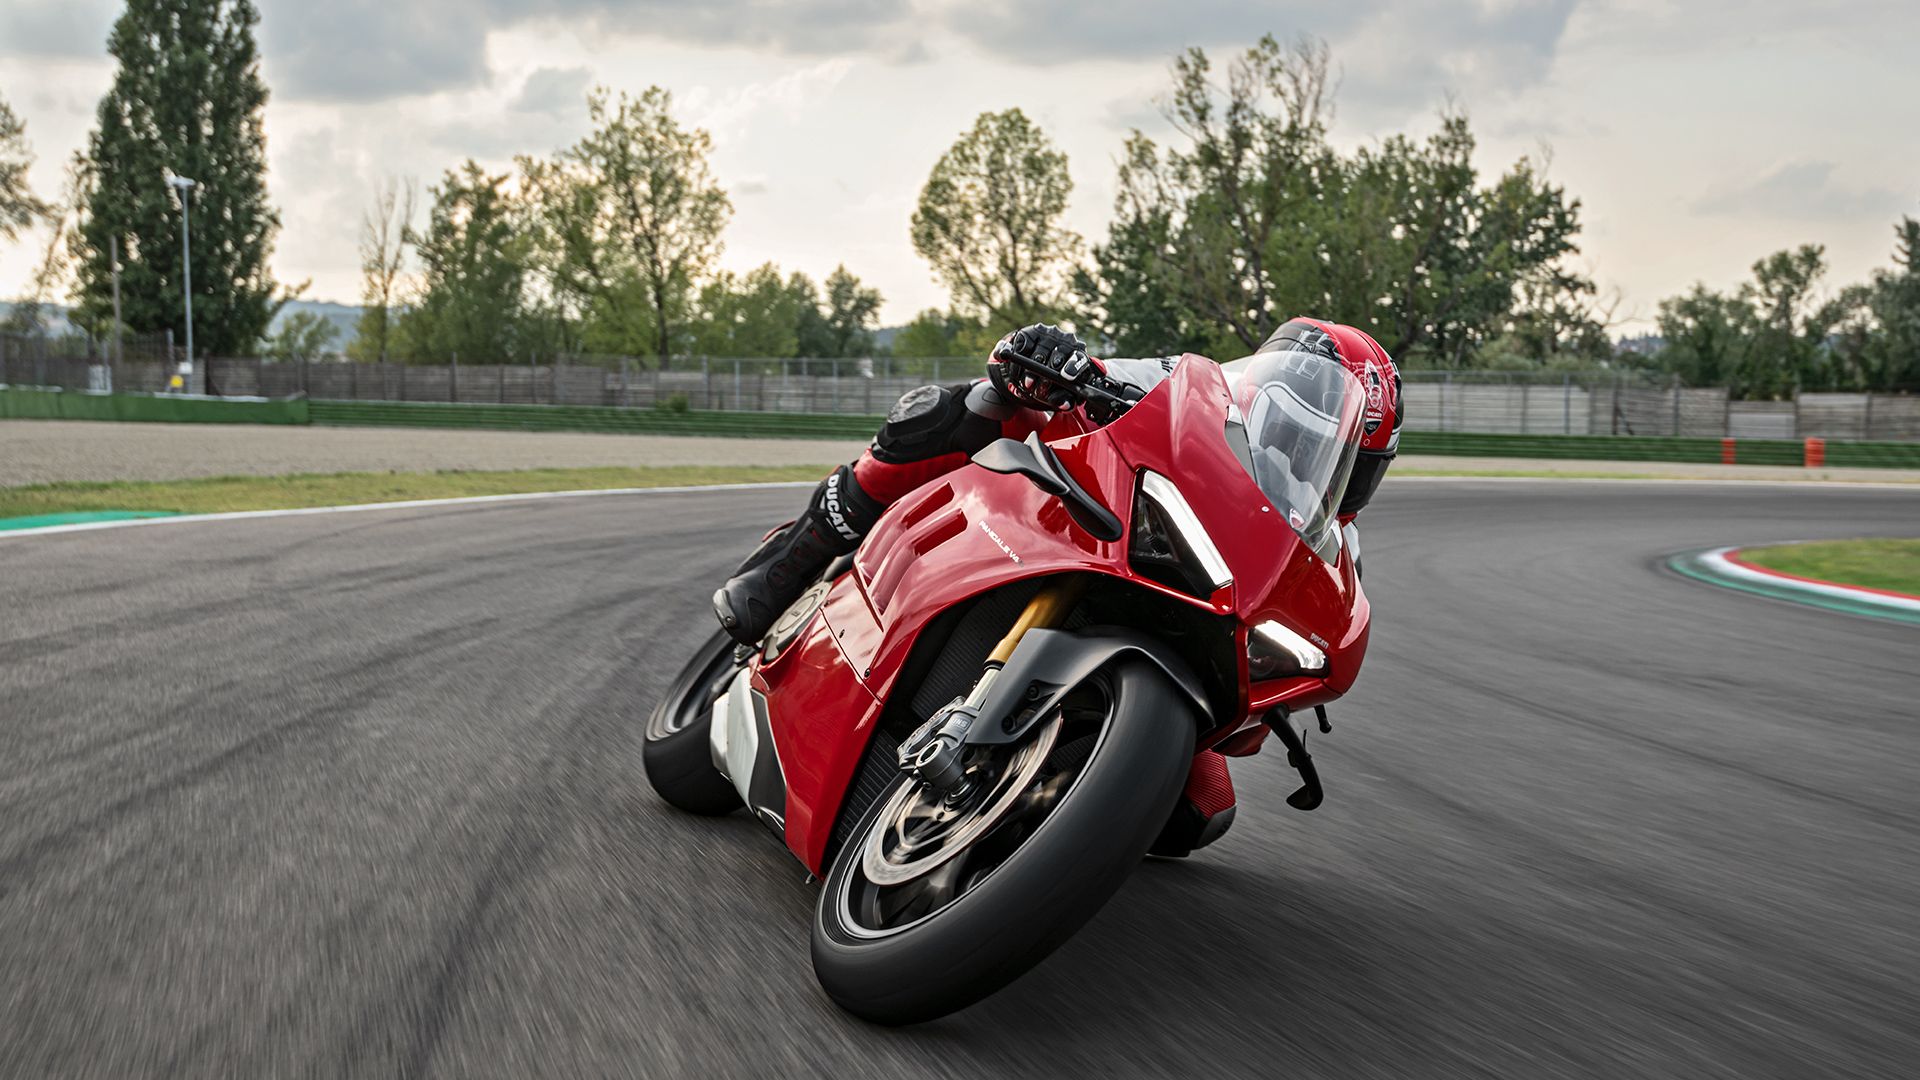 Ducati Panigale V4R riding shot